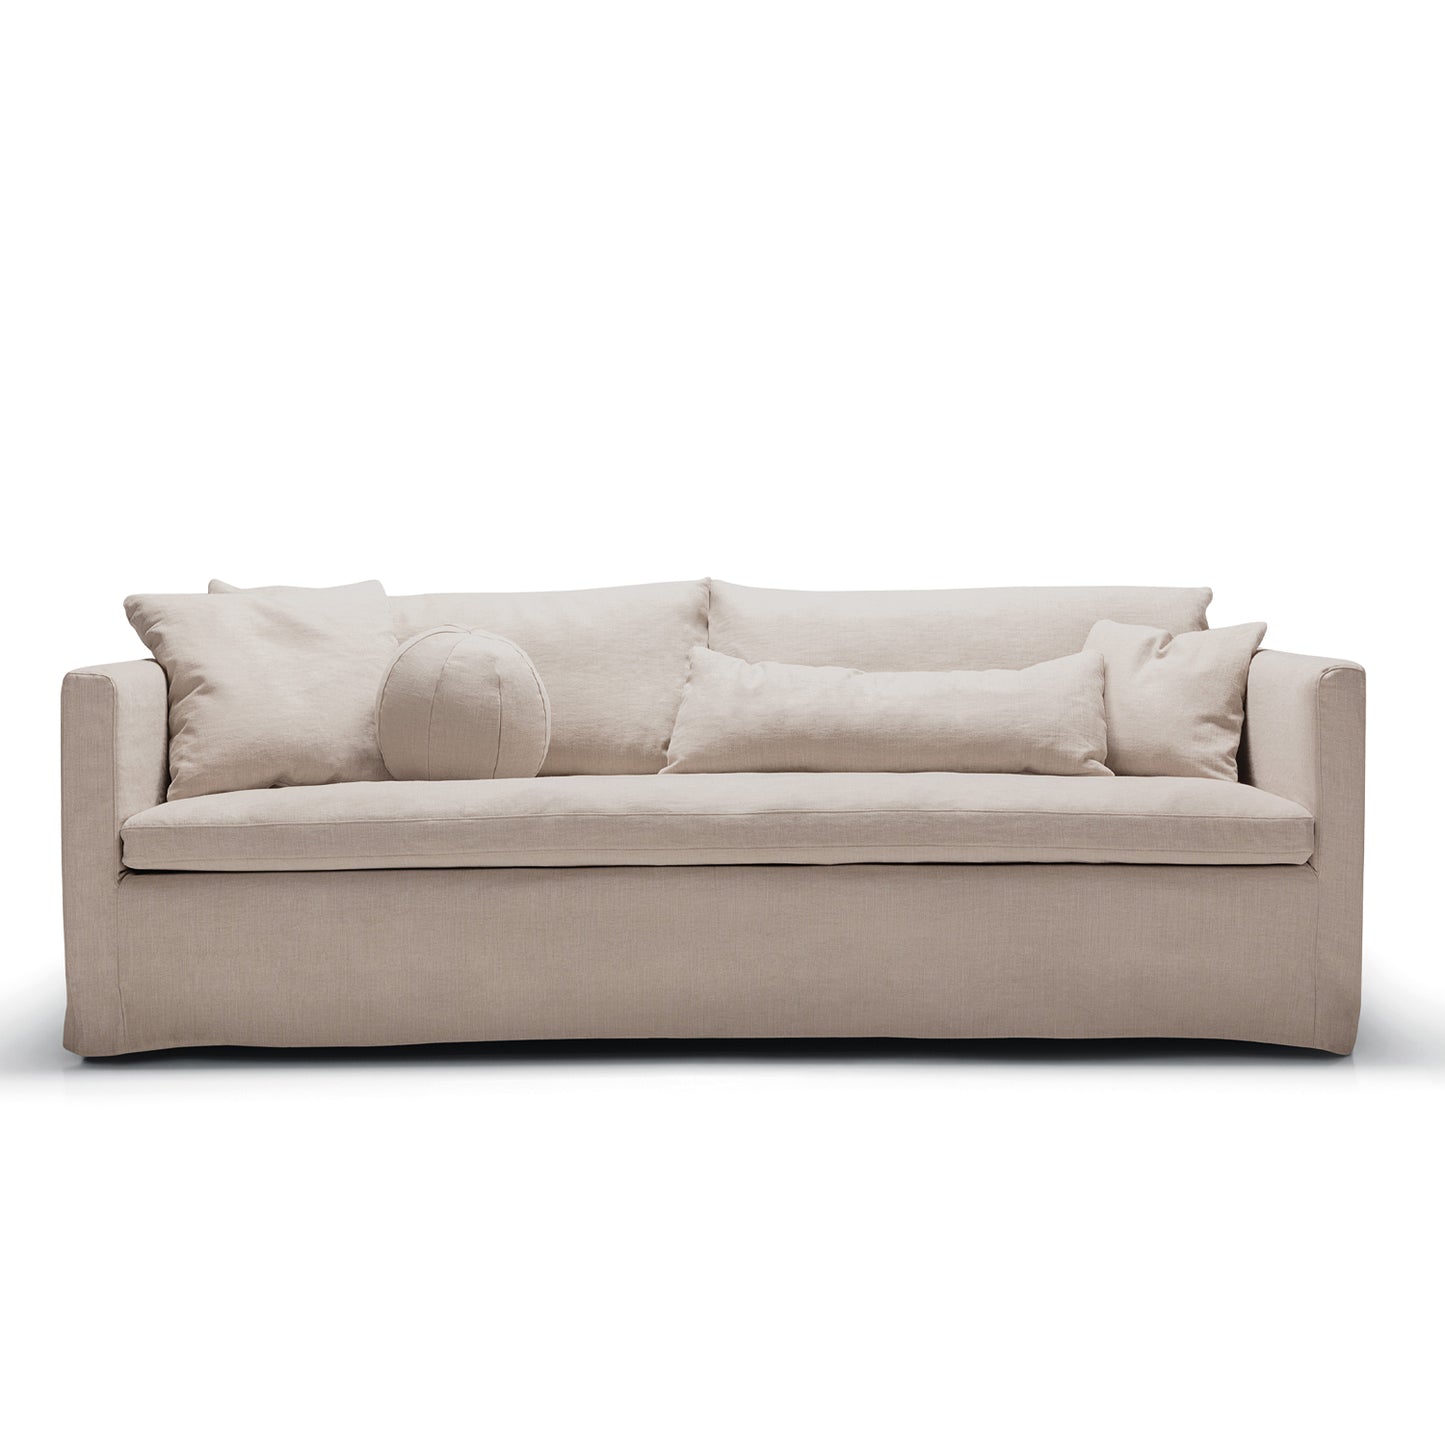 Standard 3 Seater Sofa - Fudge